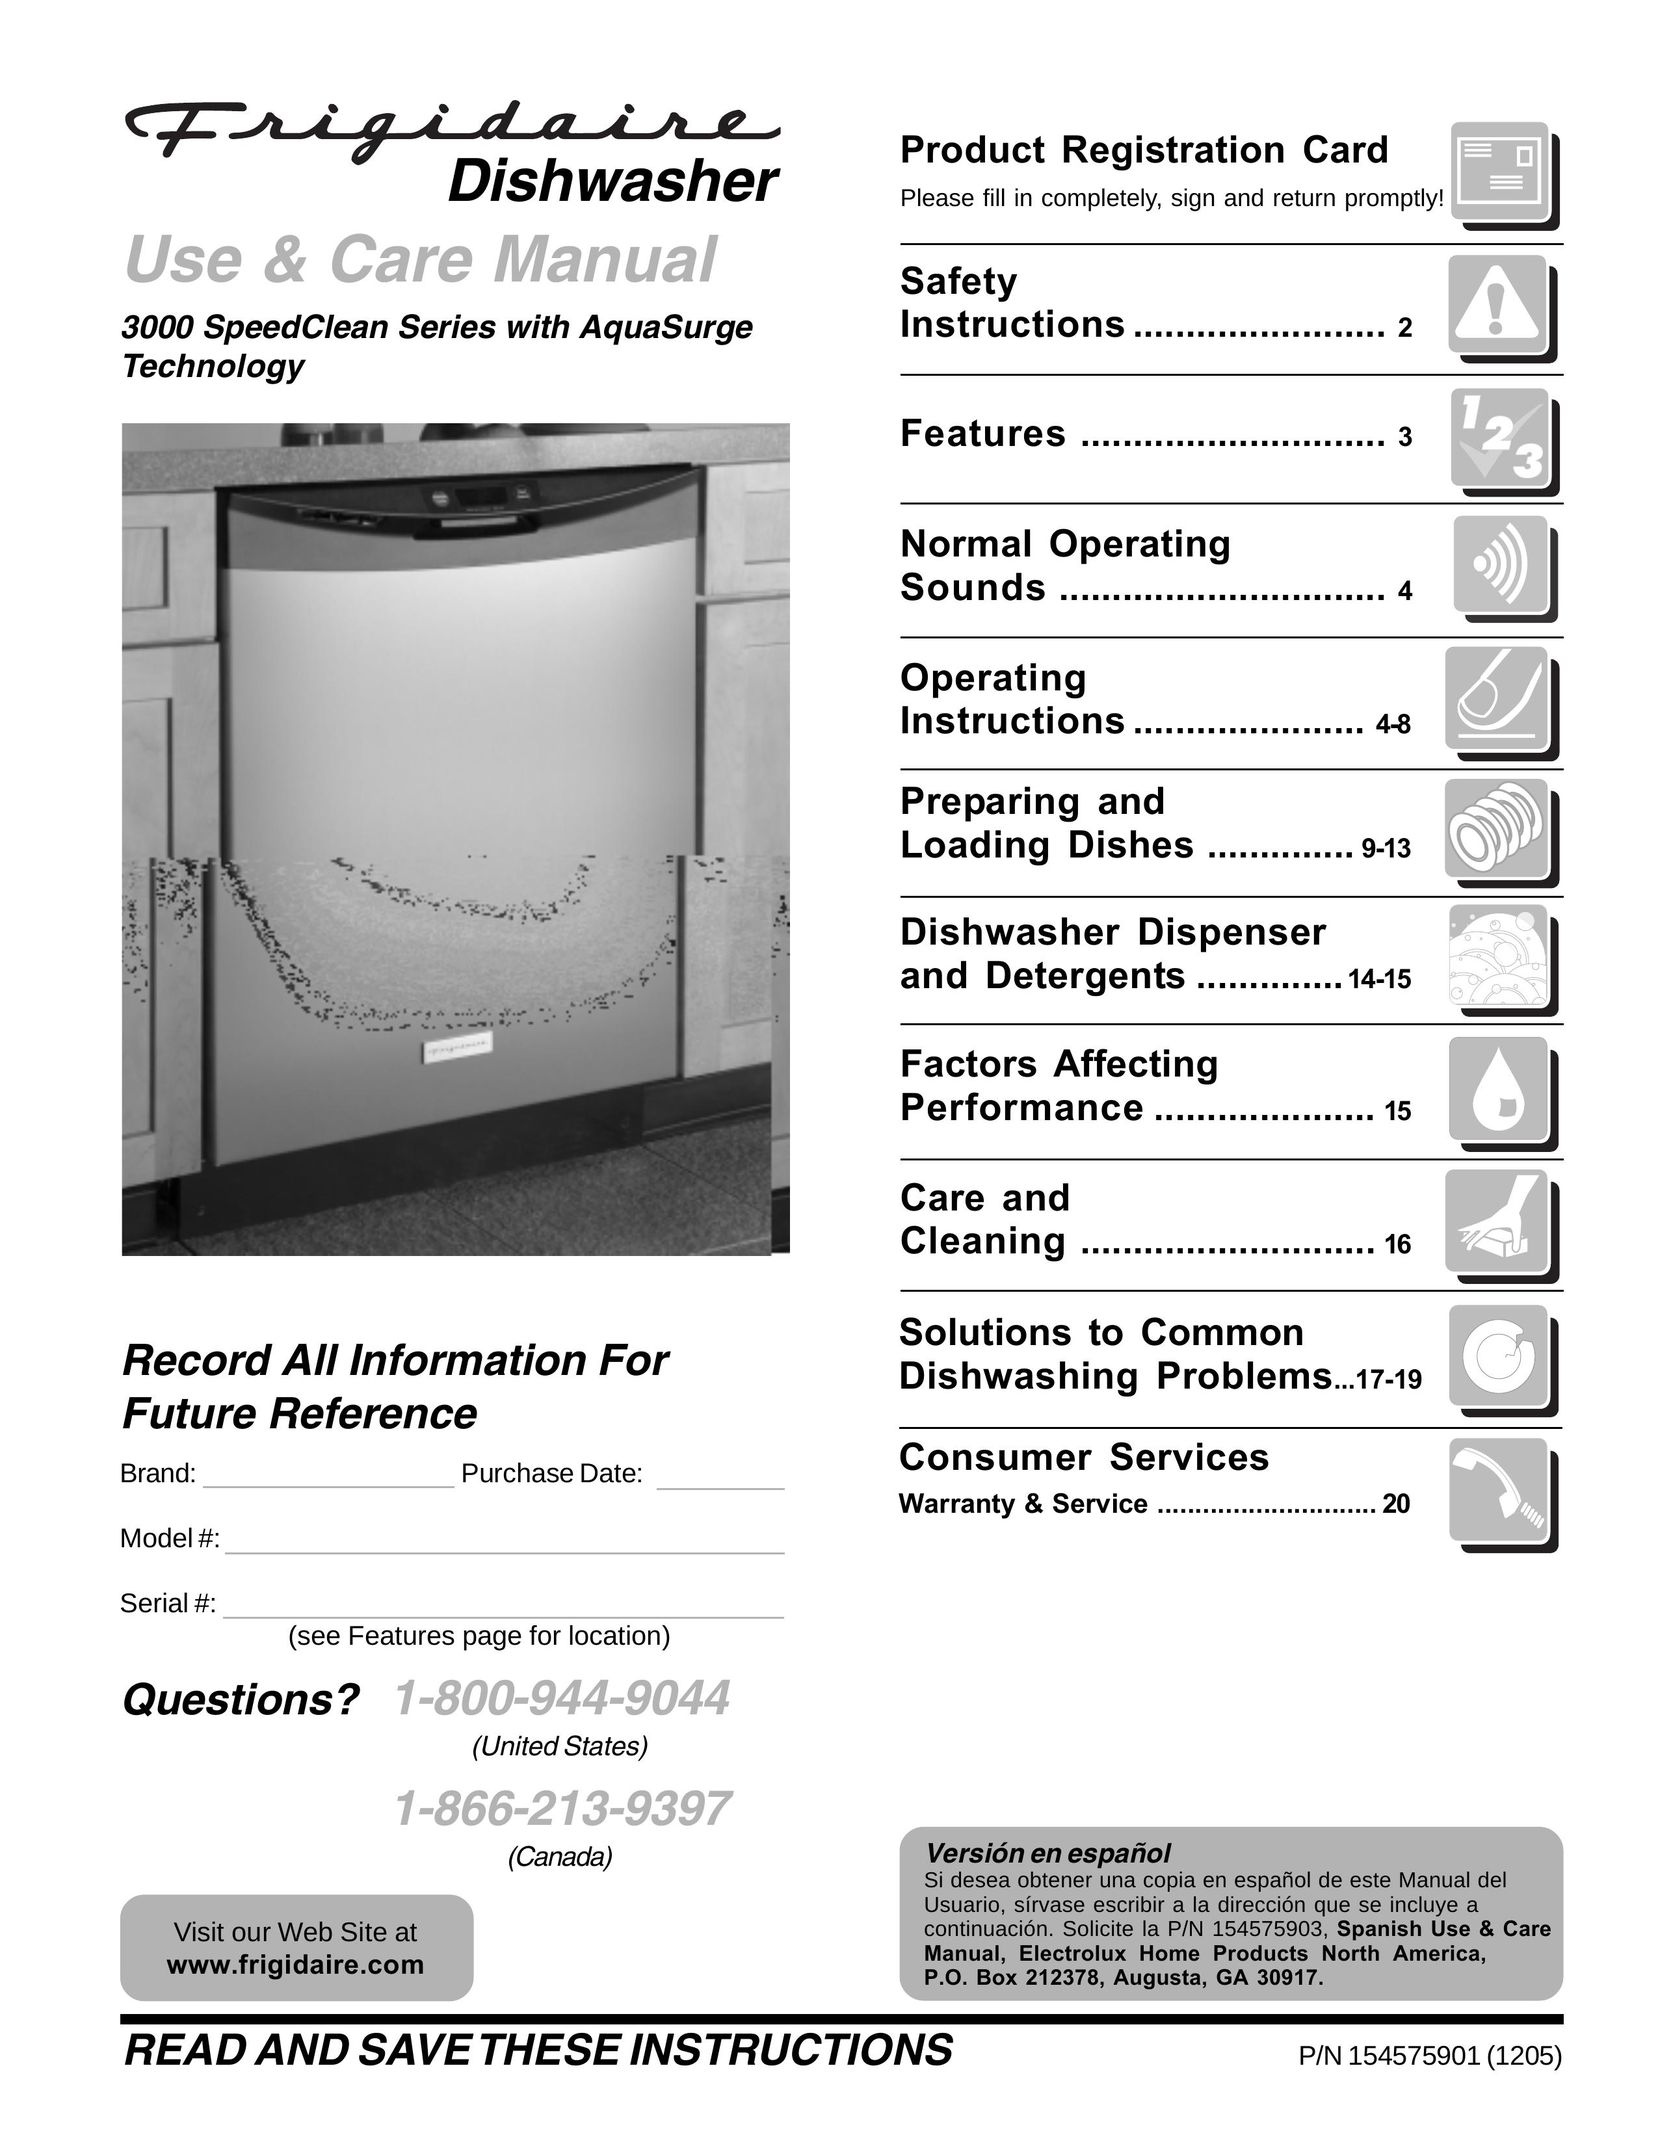 Frigidaire 3000 SpeedClean Series Dishwasher User Manual